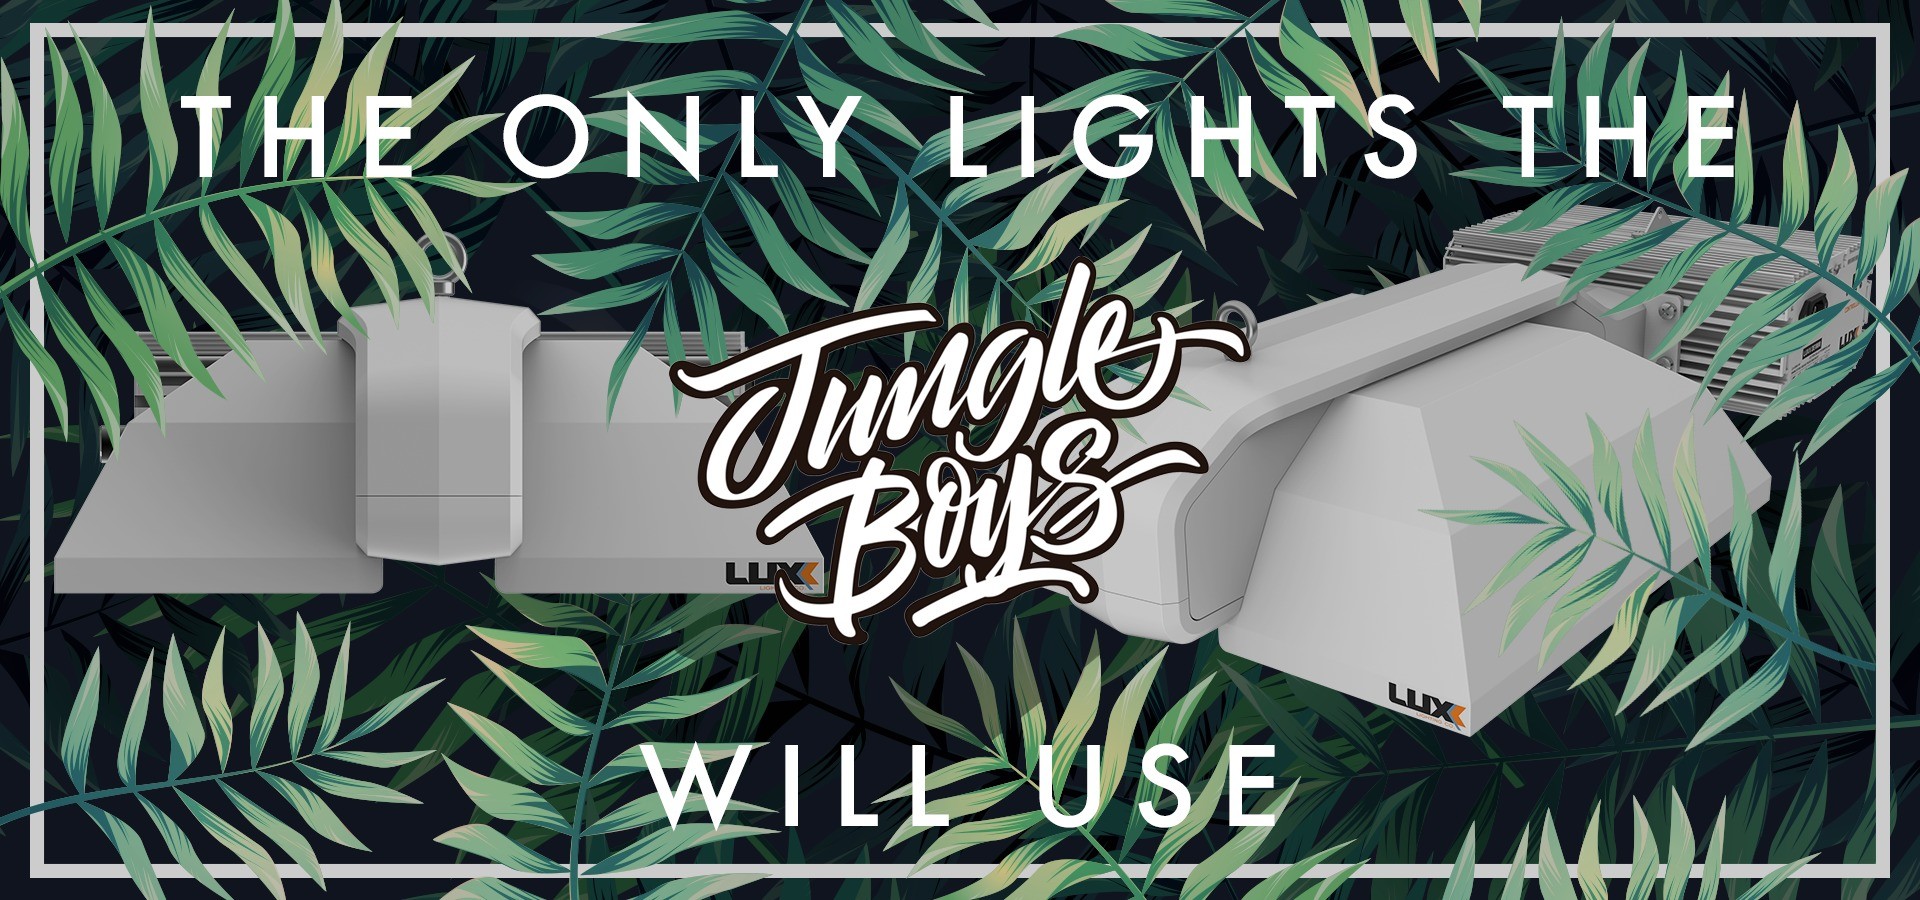 Luxx Lighting 1000 W DE y Jungle Boys